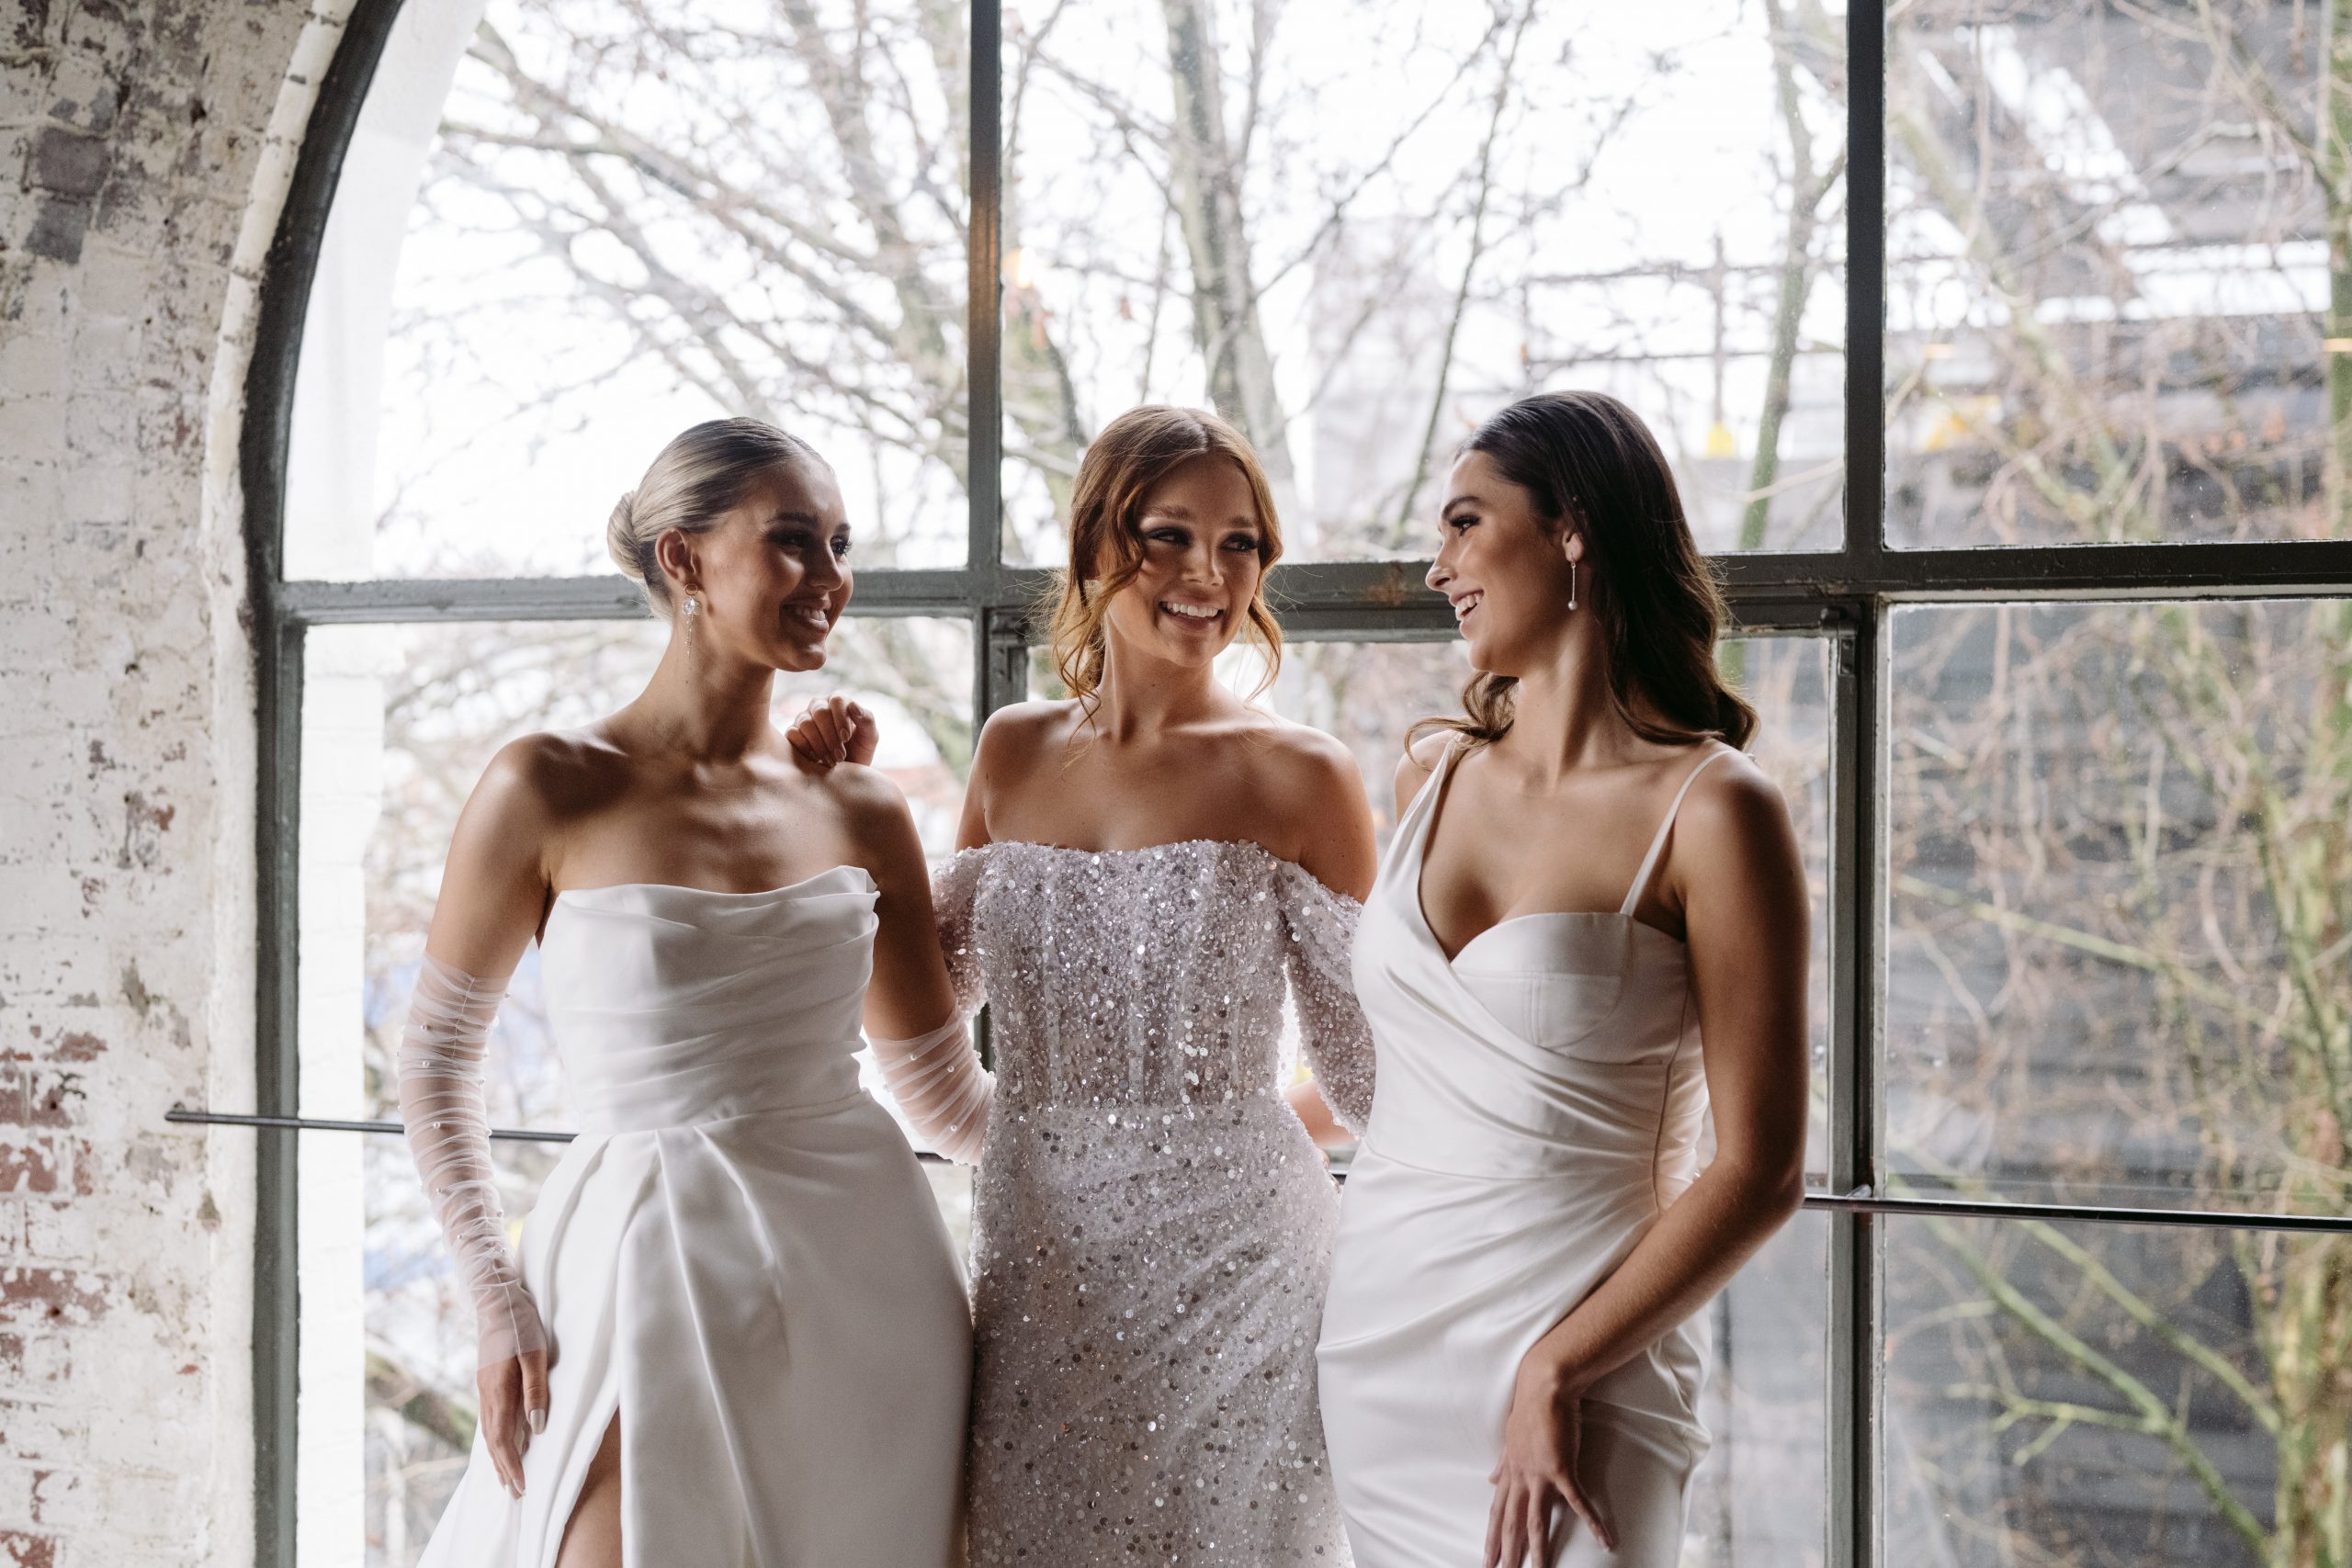 Wedding Dresses - Raffaele Ciuca Bridal Shop